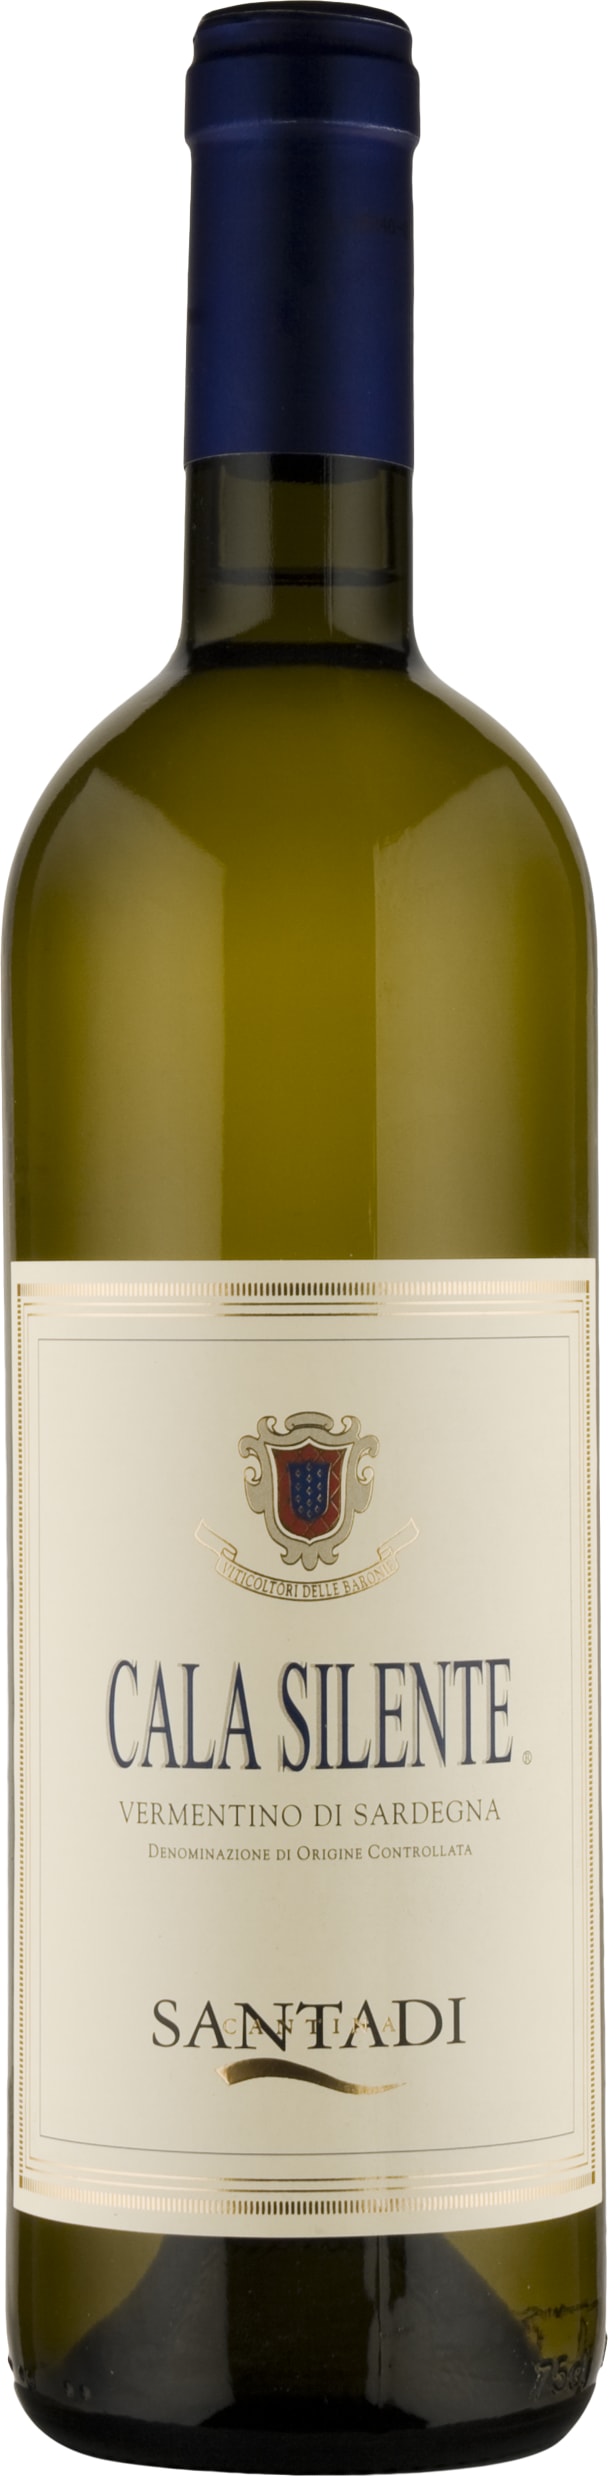 Santadi Vermentino, Cala Silente 2022 75cl - Buy Santadi Wines from GREAT WINES DIRECT wine shop